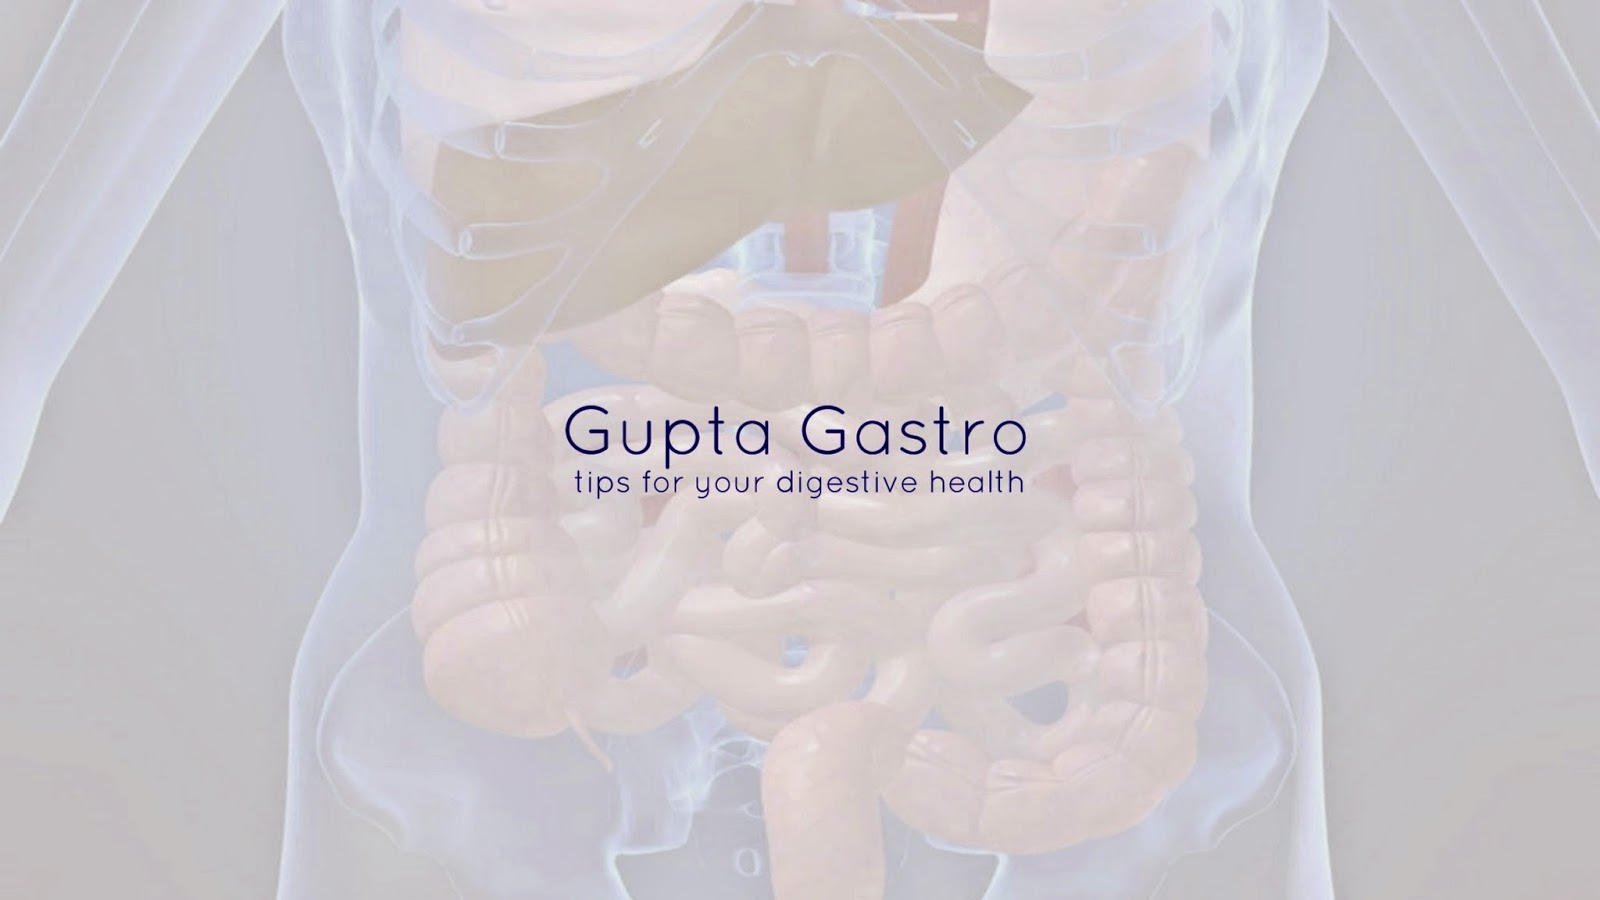 Photo of Gupta Gastro Associates - Brooklyn Gastroenterologist / Gastroenterology Doctor in Brooklyn City, New York, United States - 4 Picture of Point of interest, Establishment, Health, Hospital, Doctor